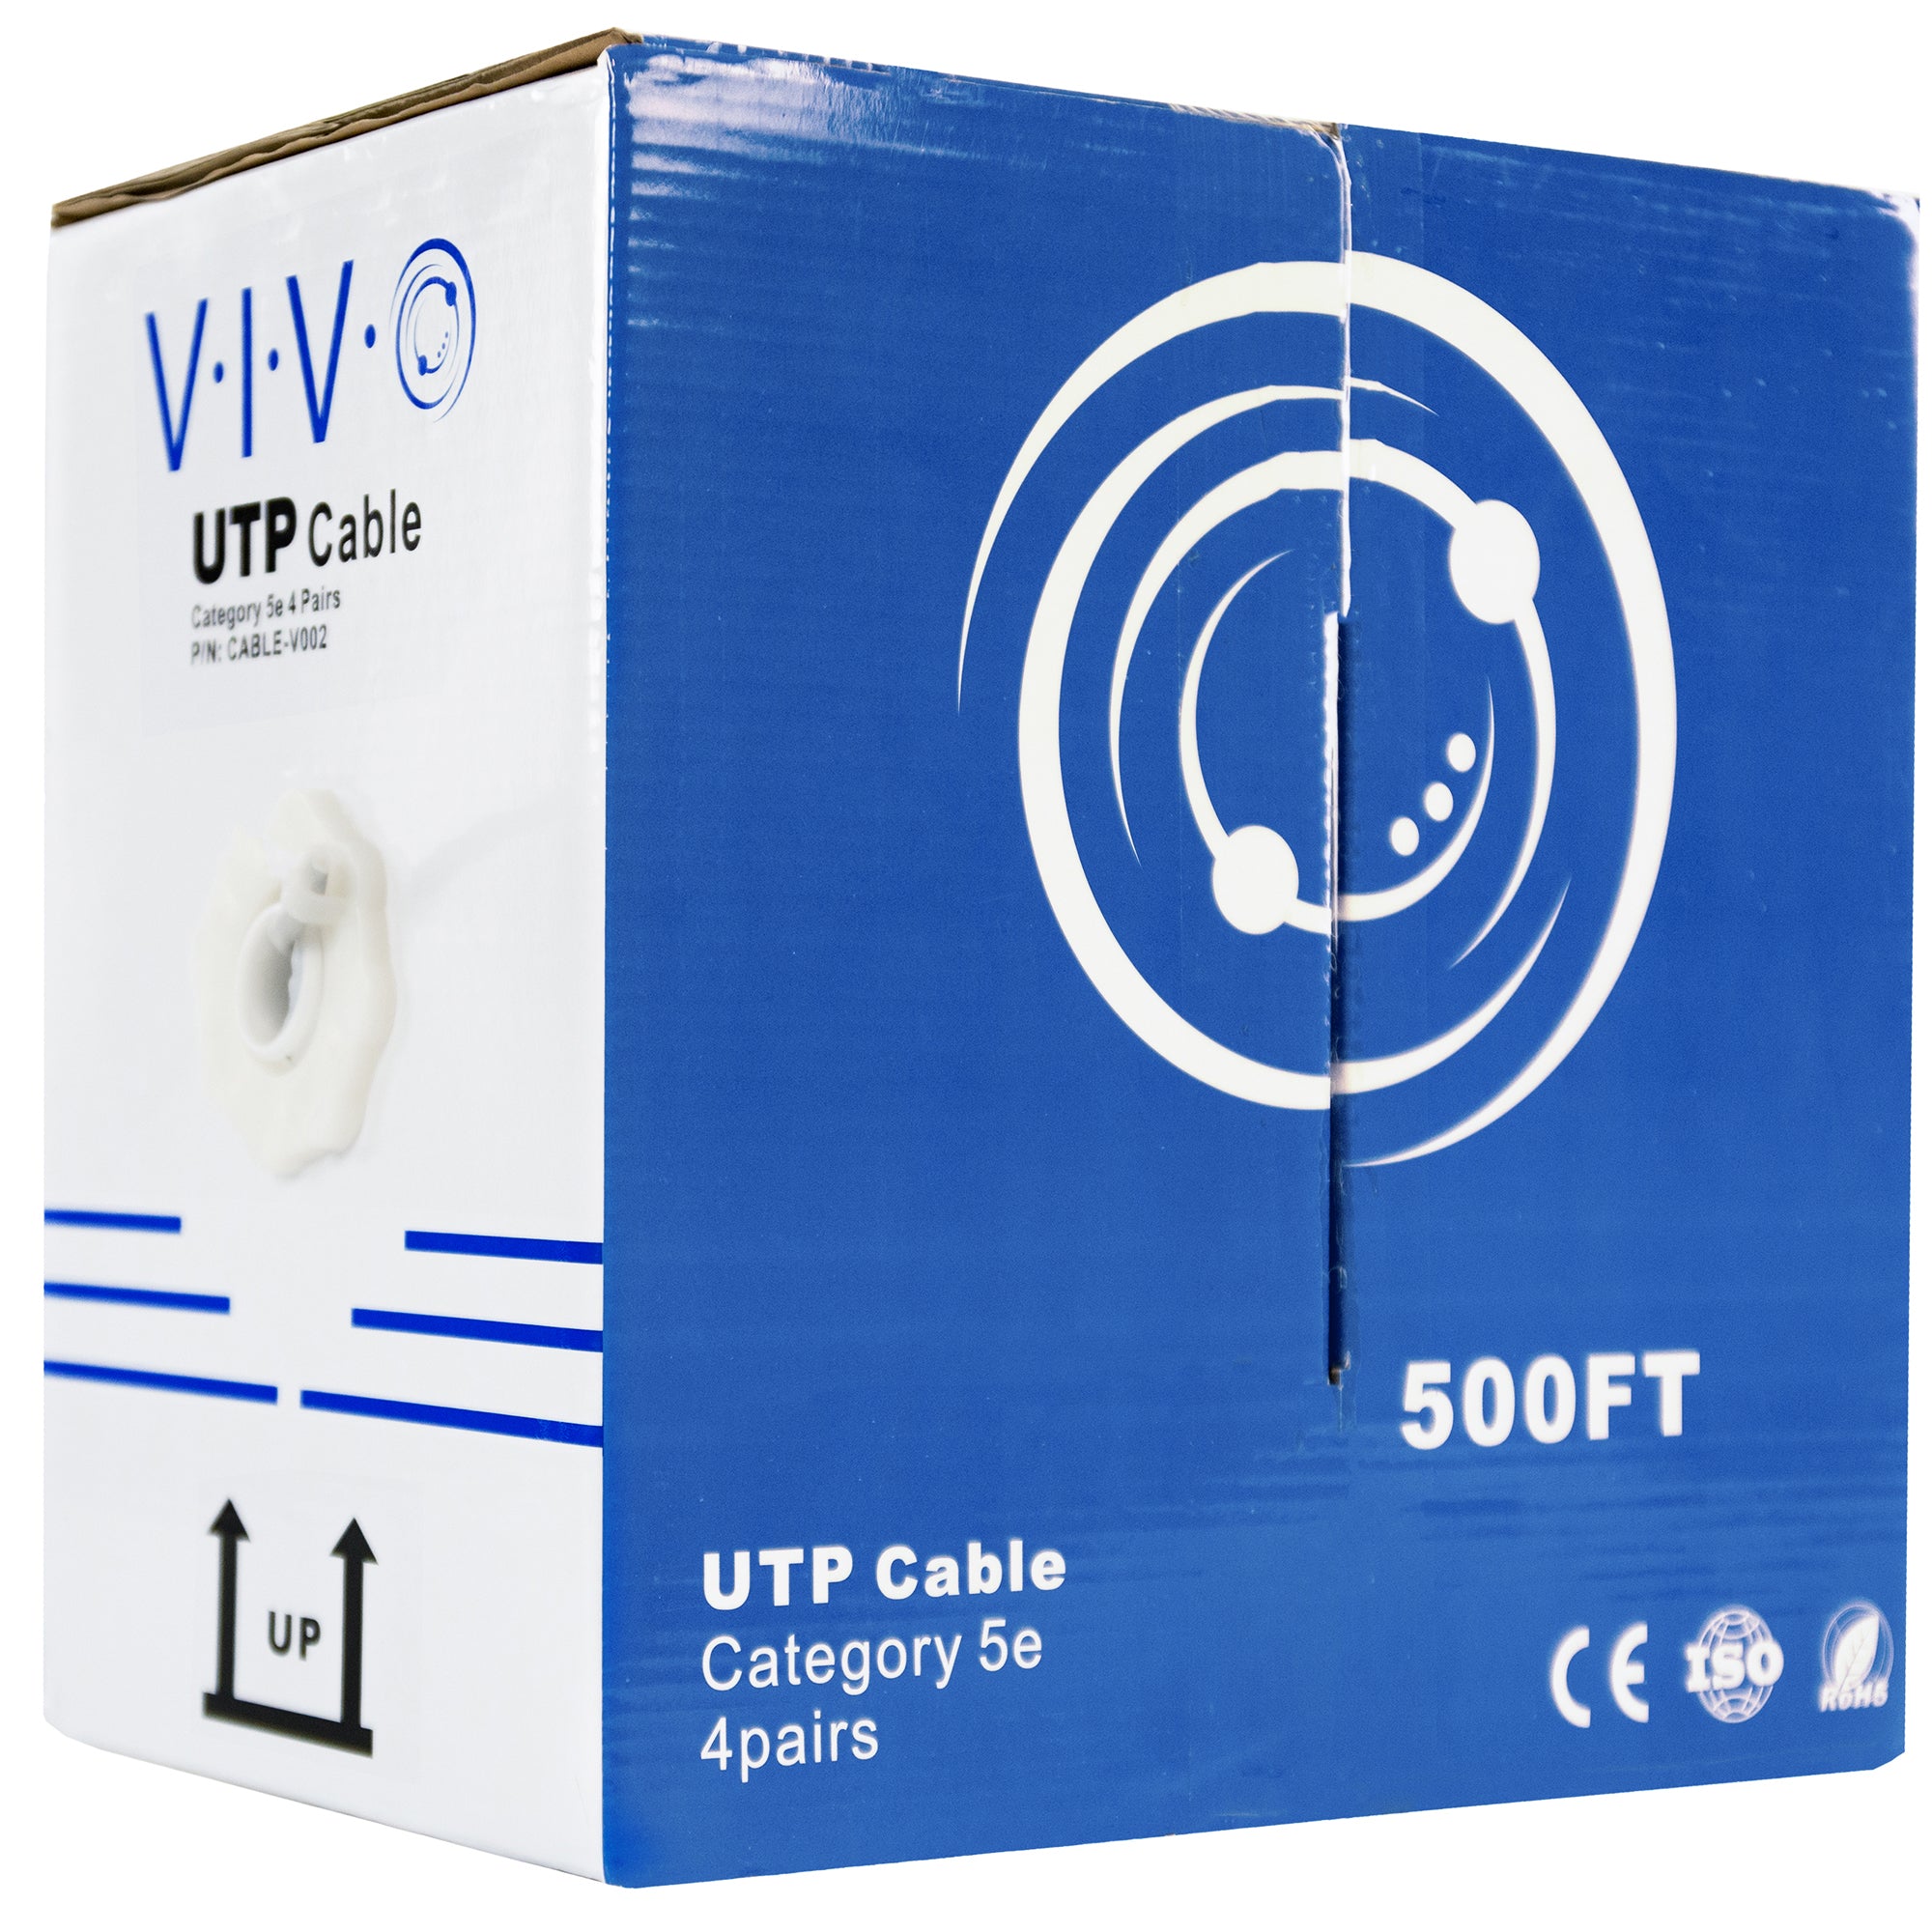 Câble Ethernet Cat 5 RCA, bleu, 25 pi